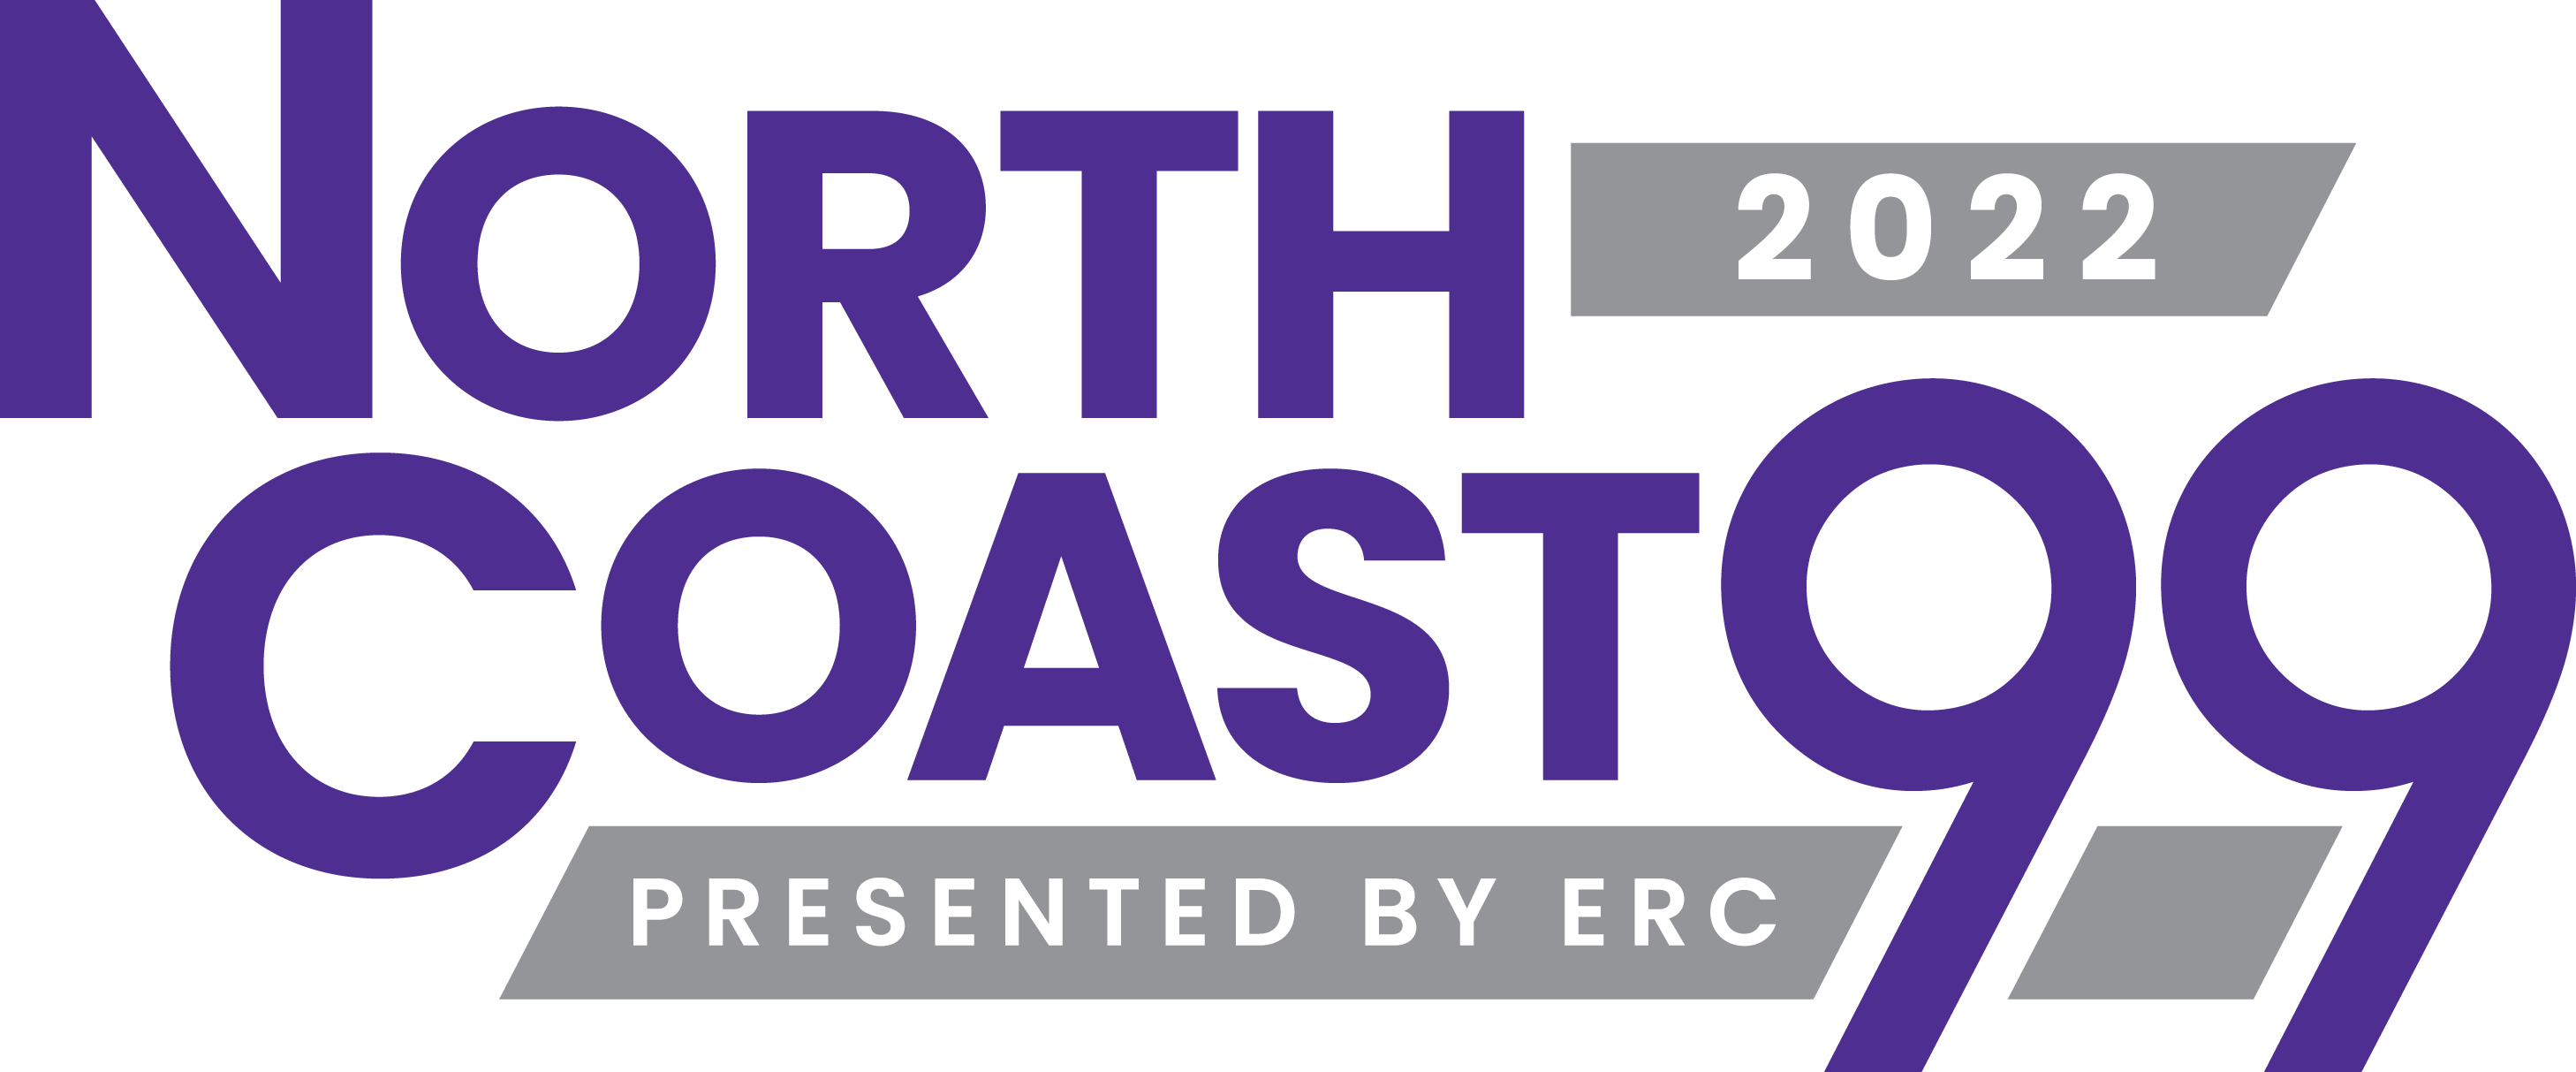 North Coast 99 logo 2022